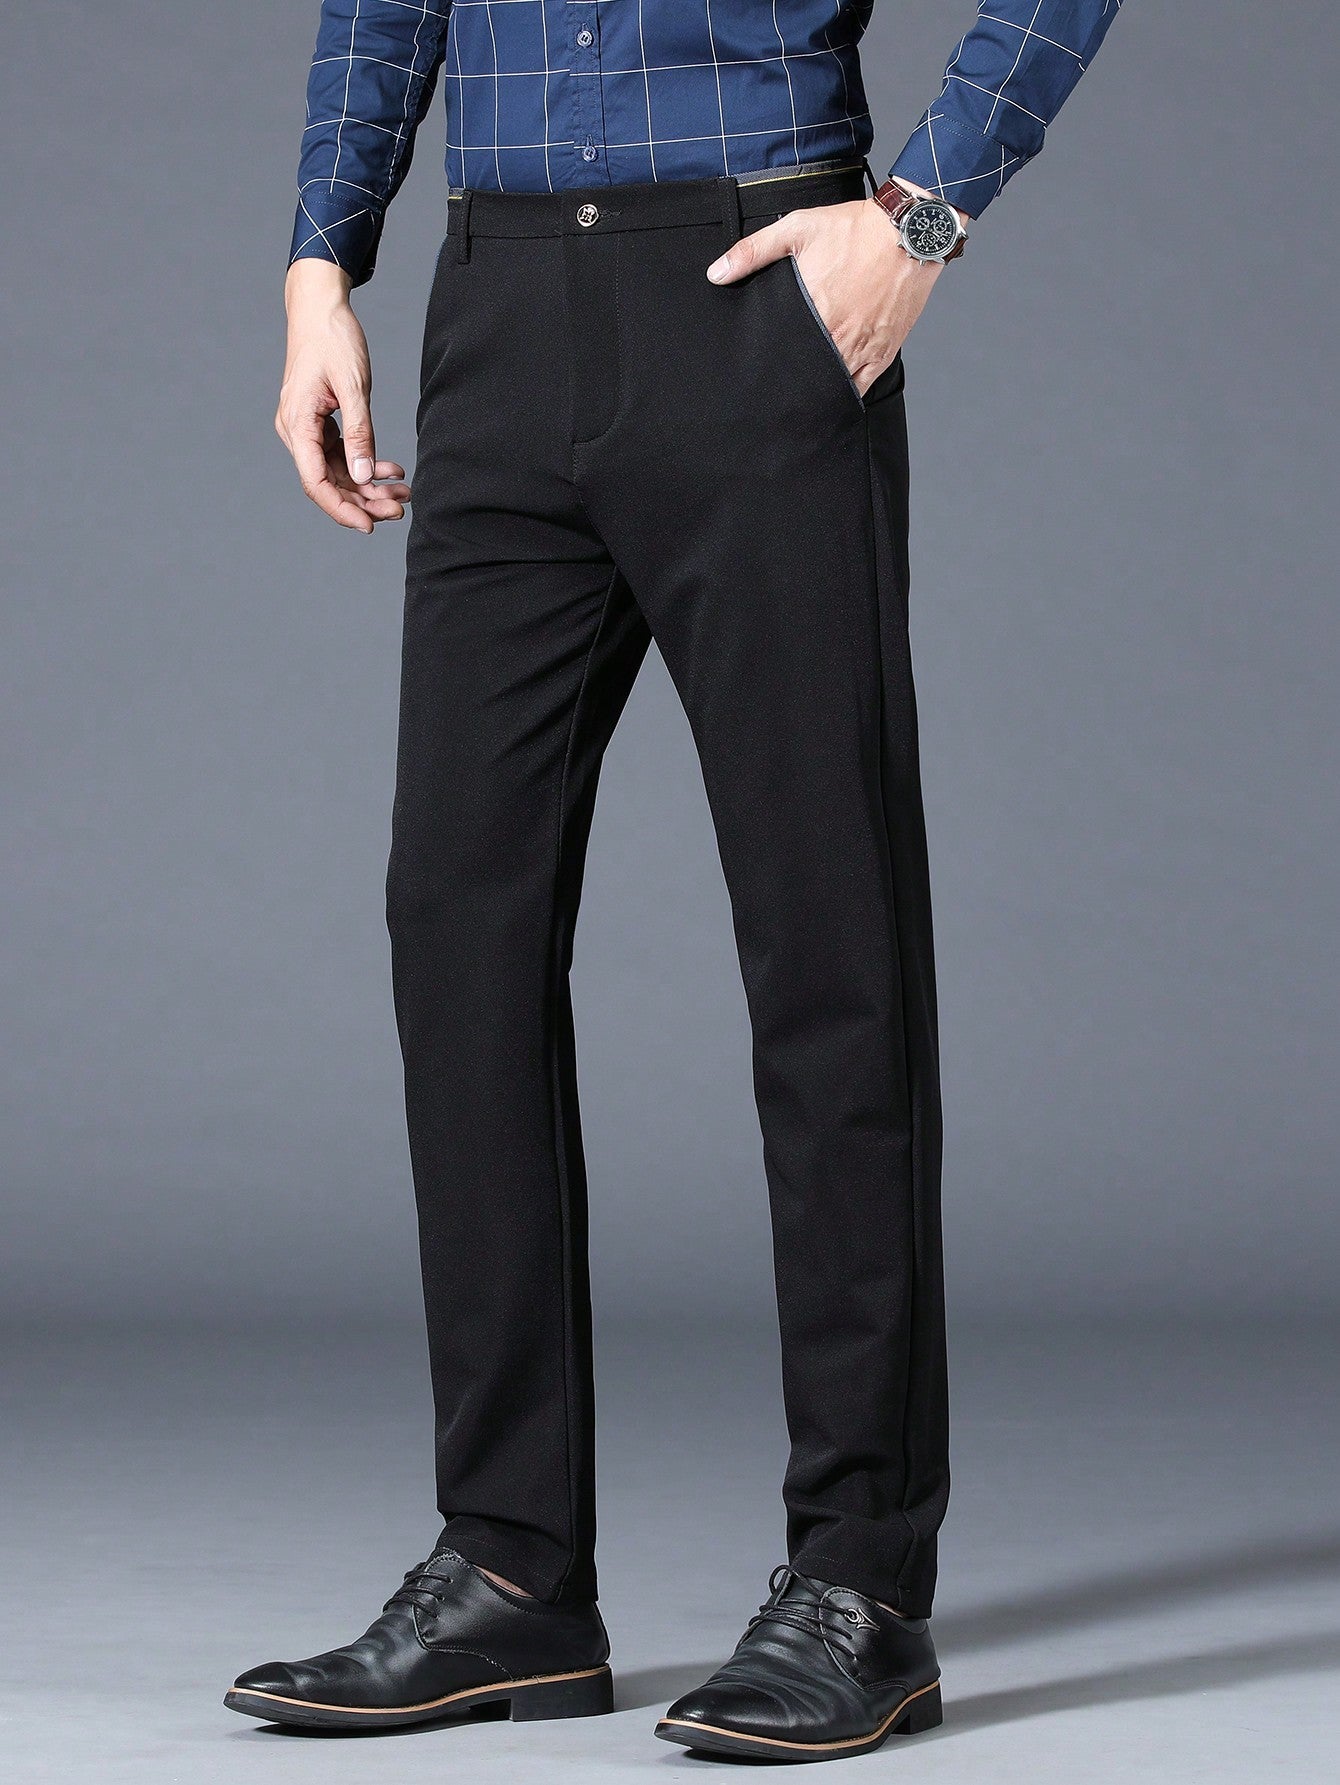 Men's Business Straight Leg Dress Pants